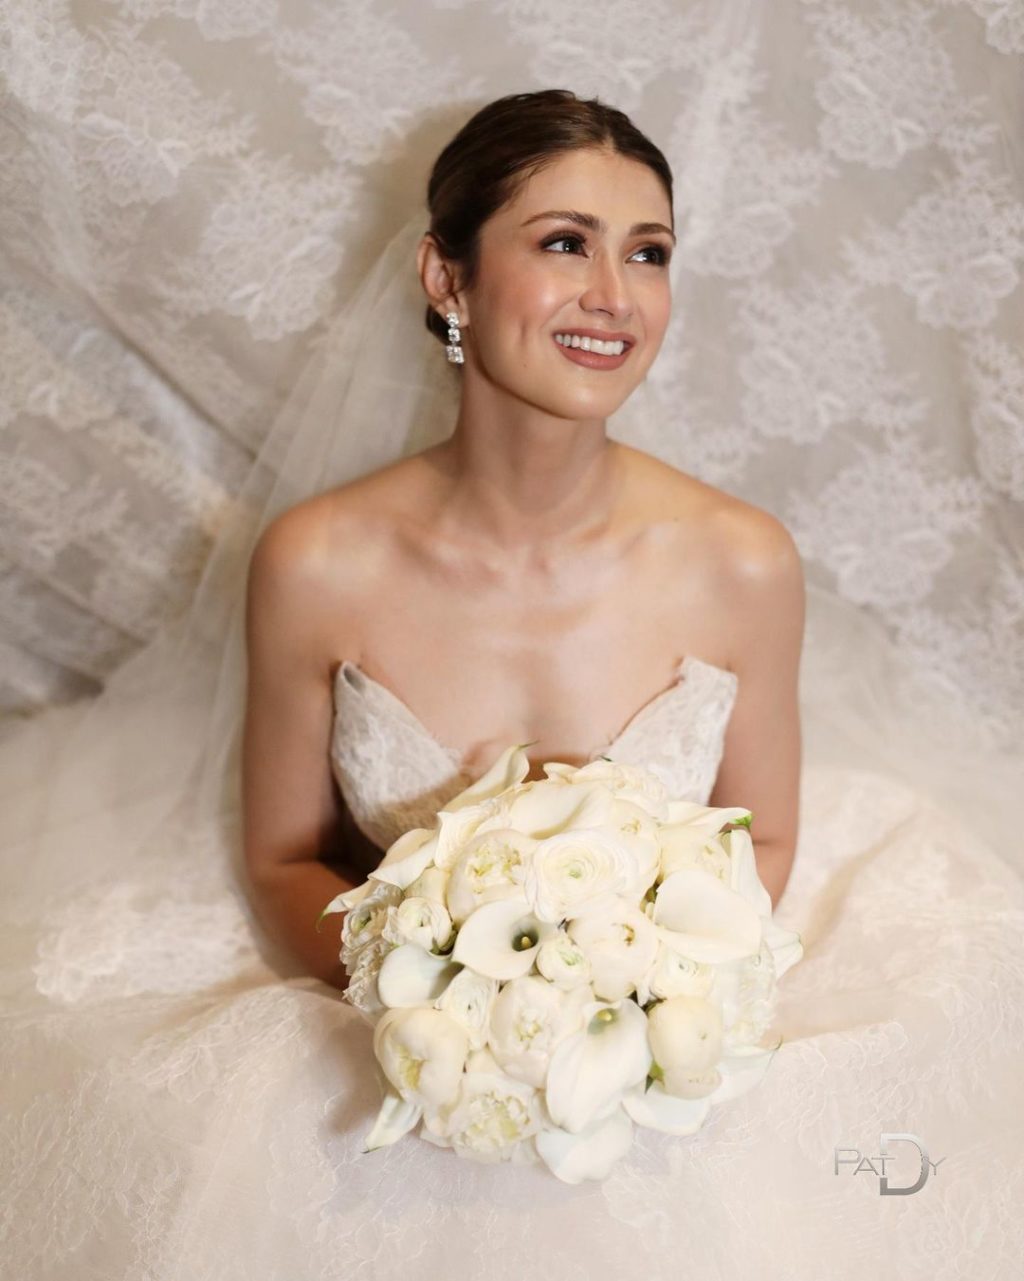 Carla Abellana in her wedding dress.